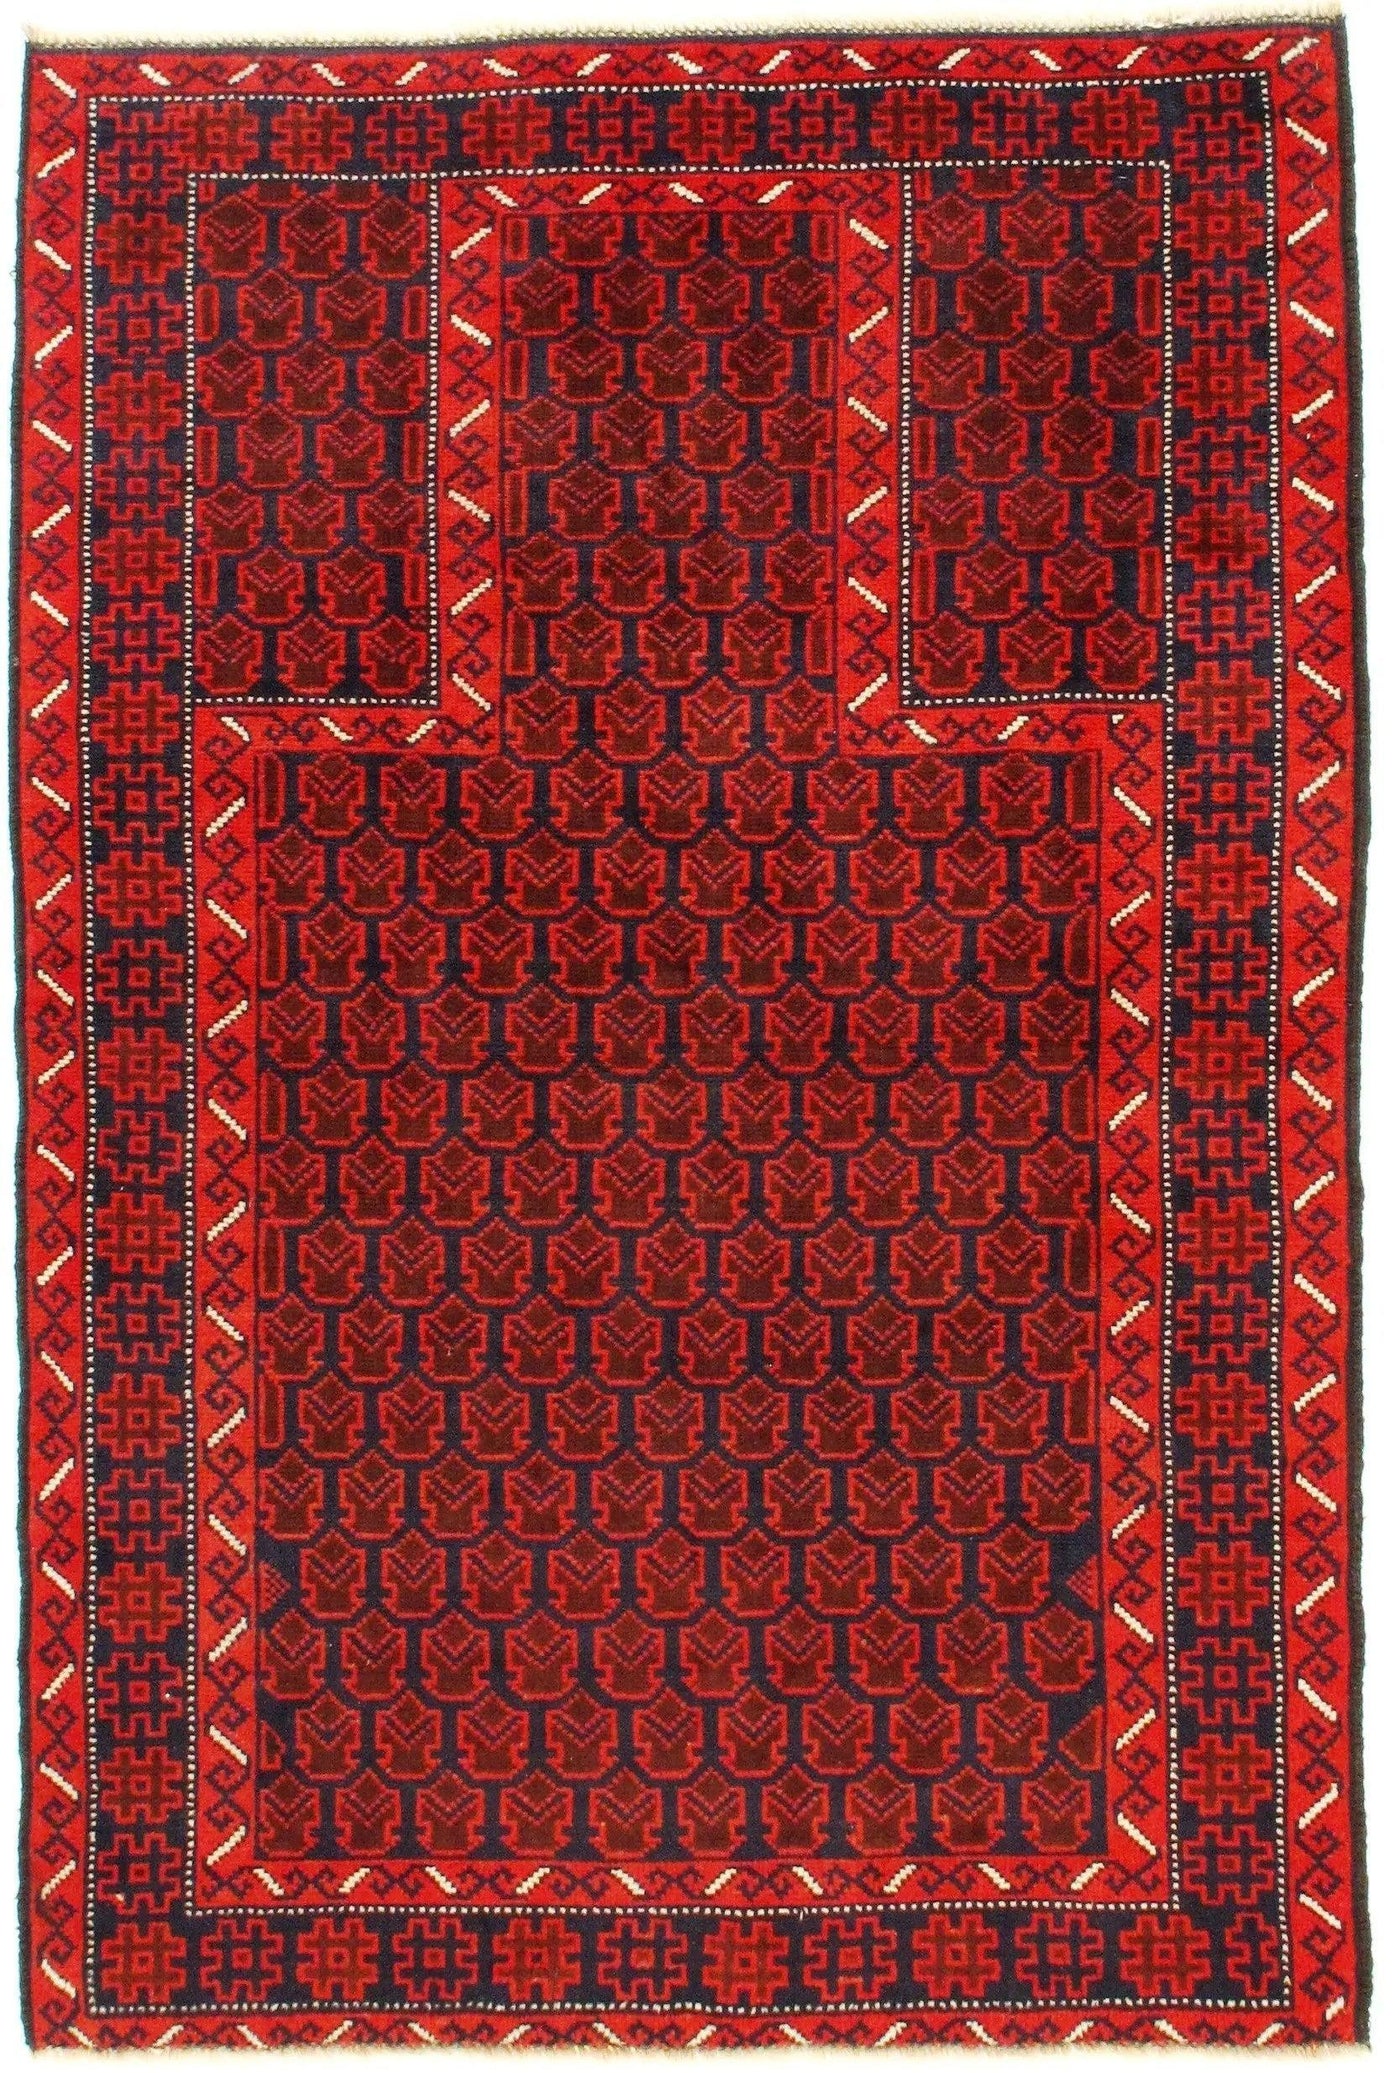 Red Balouchi Prayer Rug - 3' x 5'